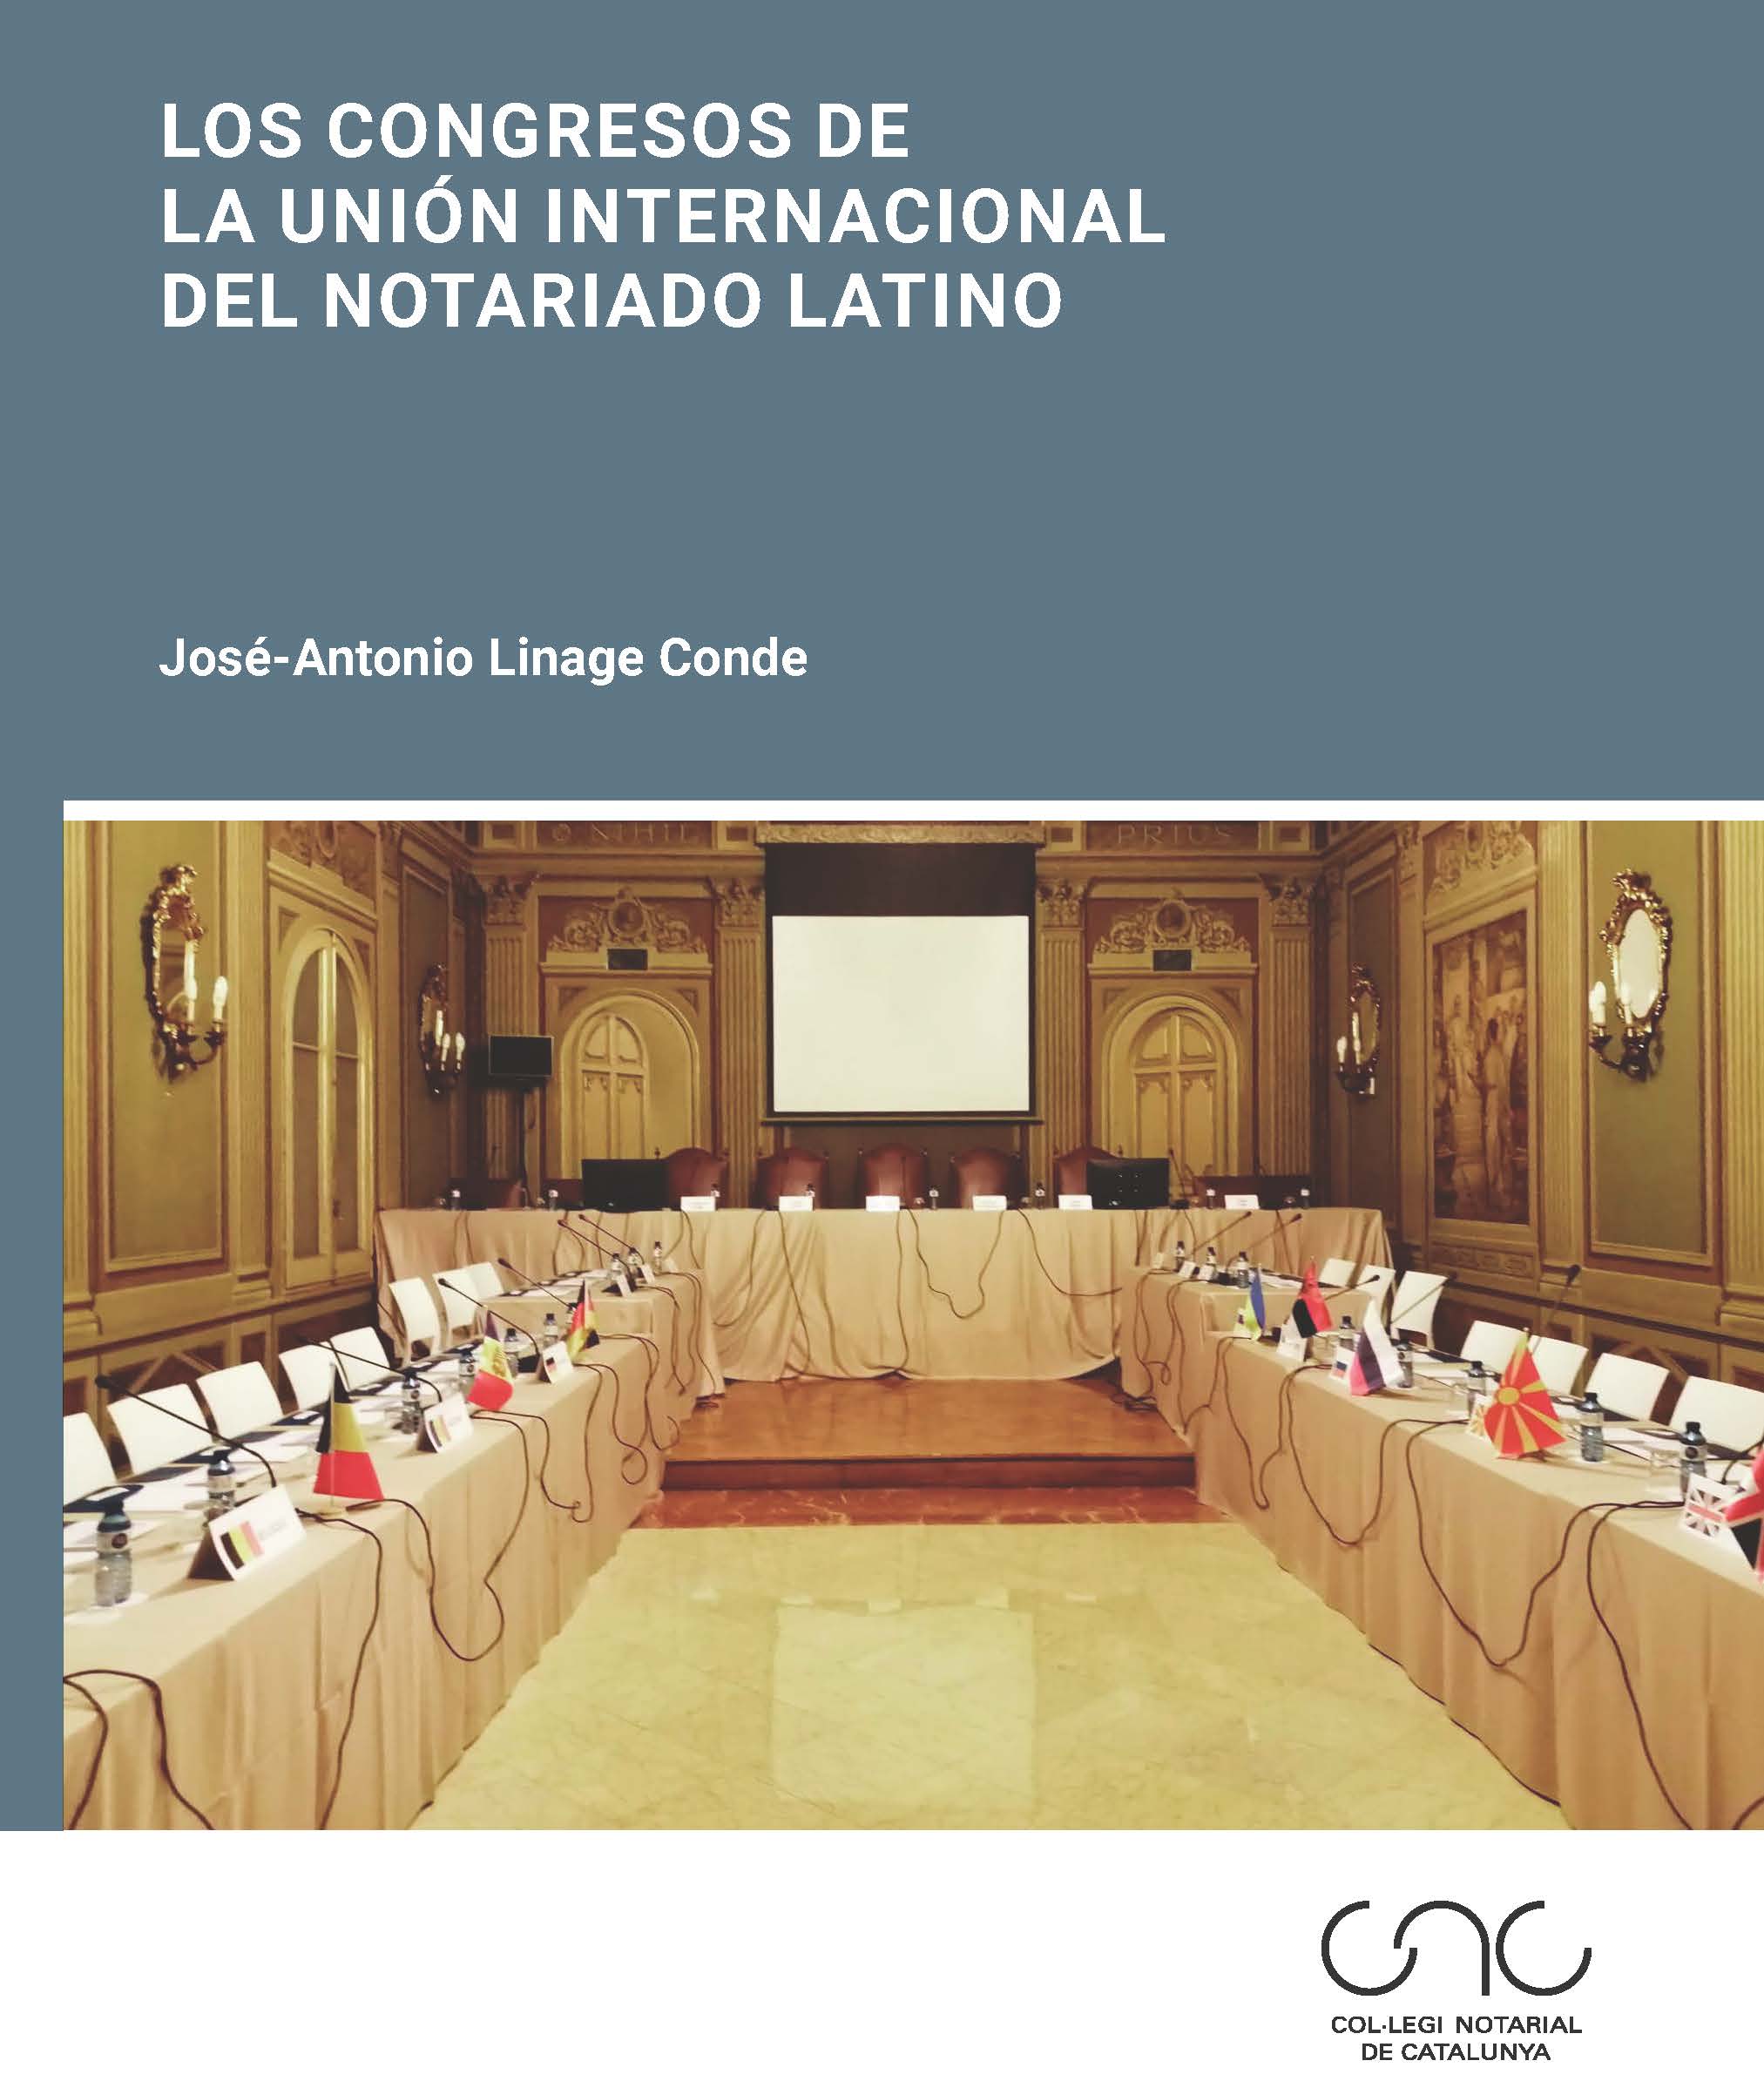 Congresos Unión Internacional del notariado latino